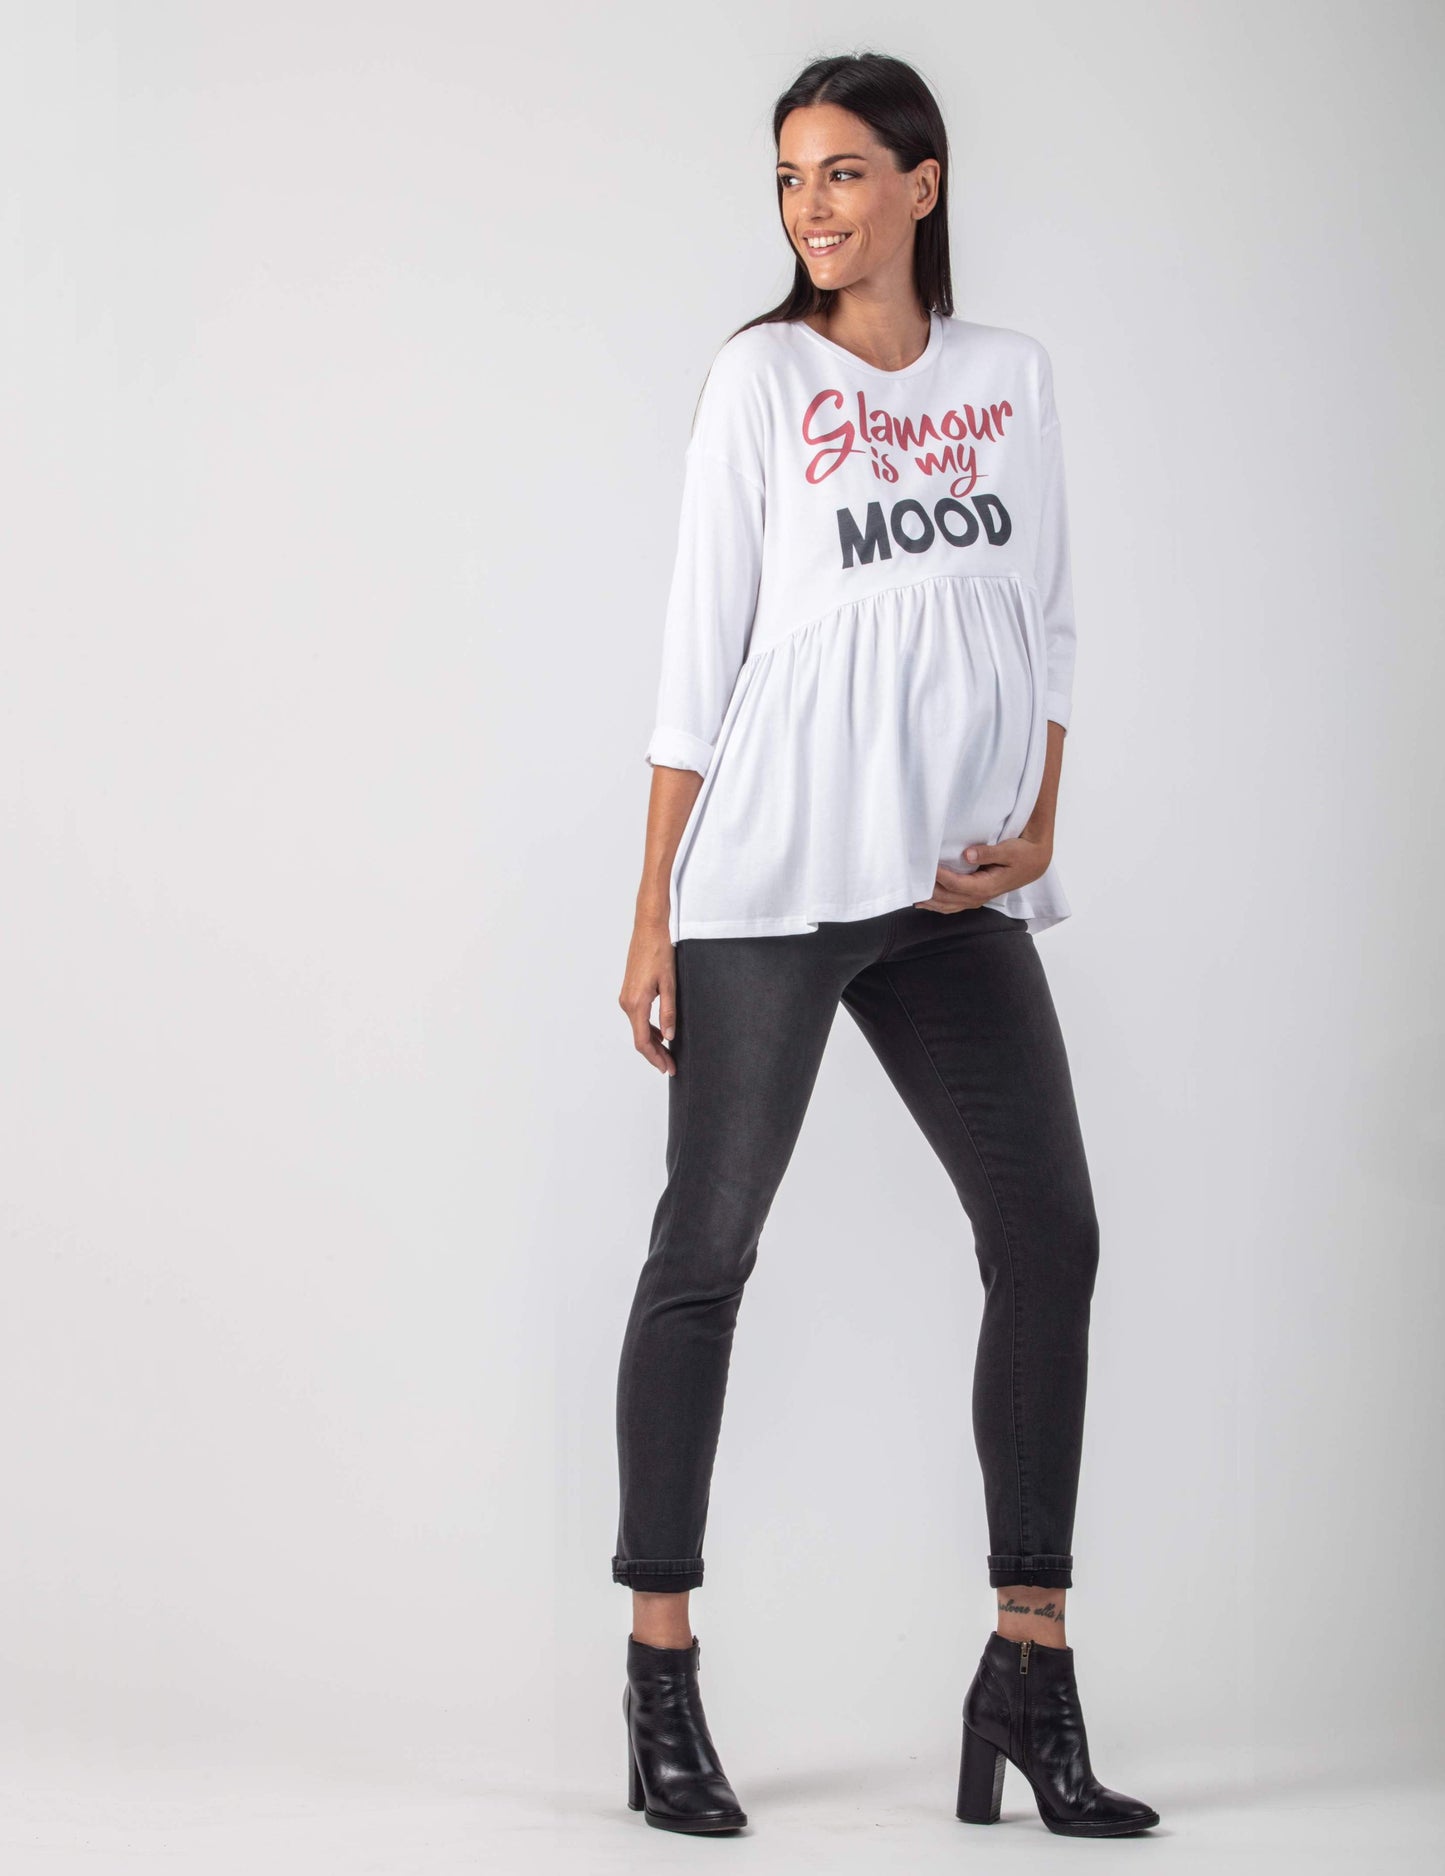 Women's cotton White Crop sleeve maternity & postnatal "Glamour is my Mood" empire waist top